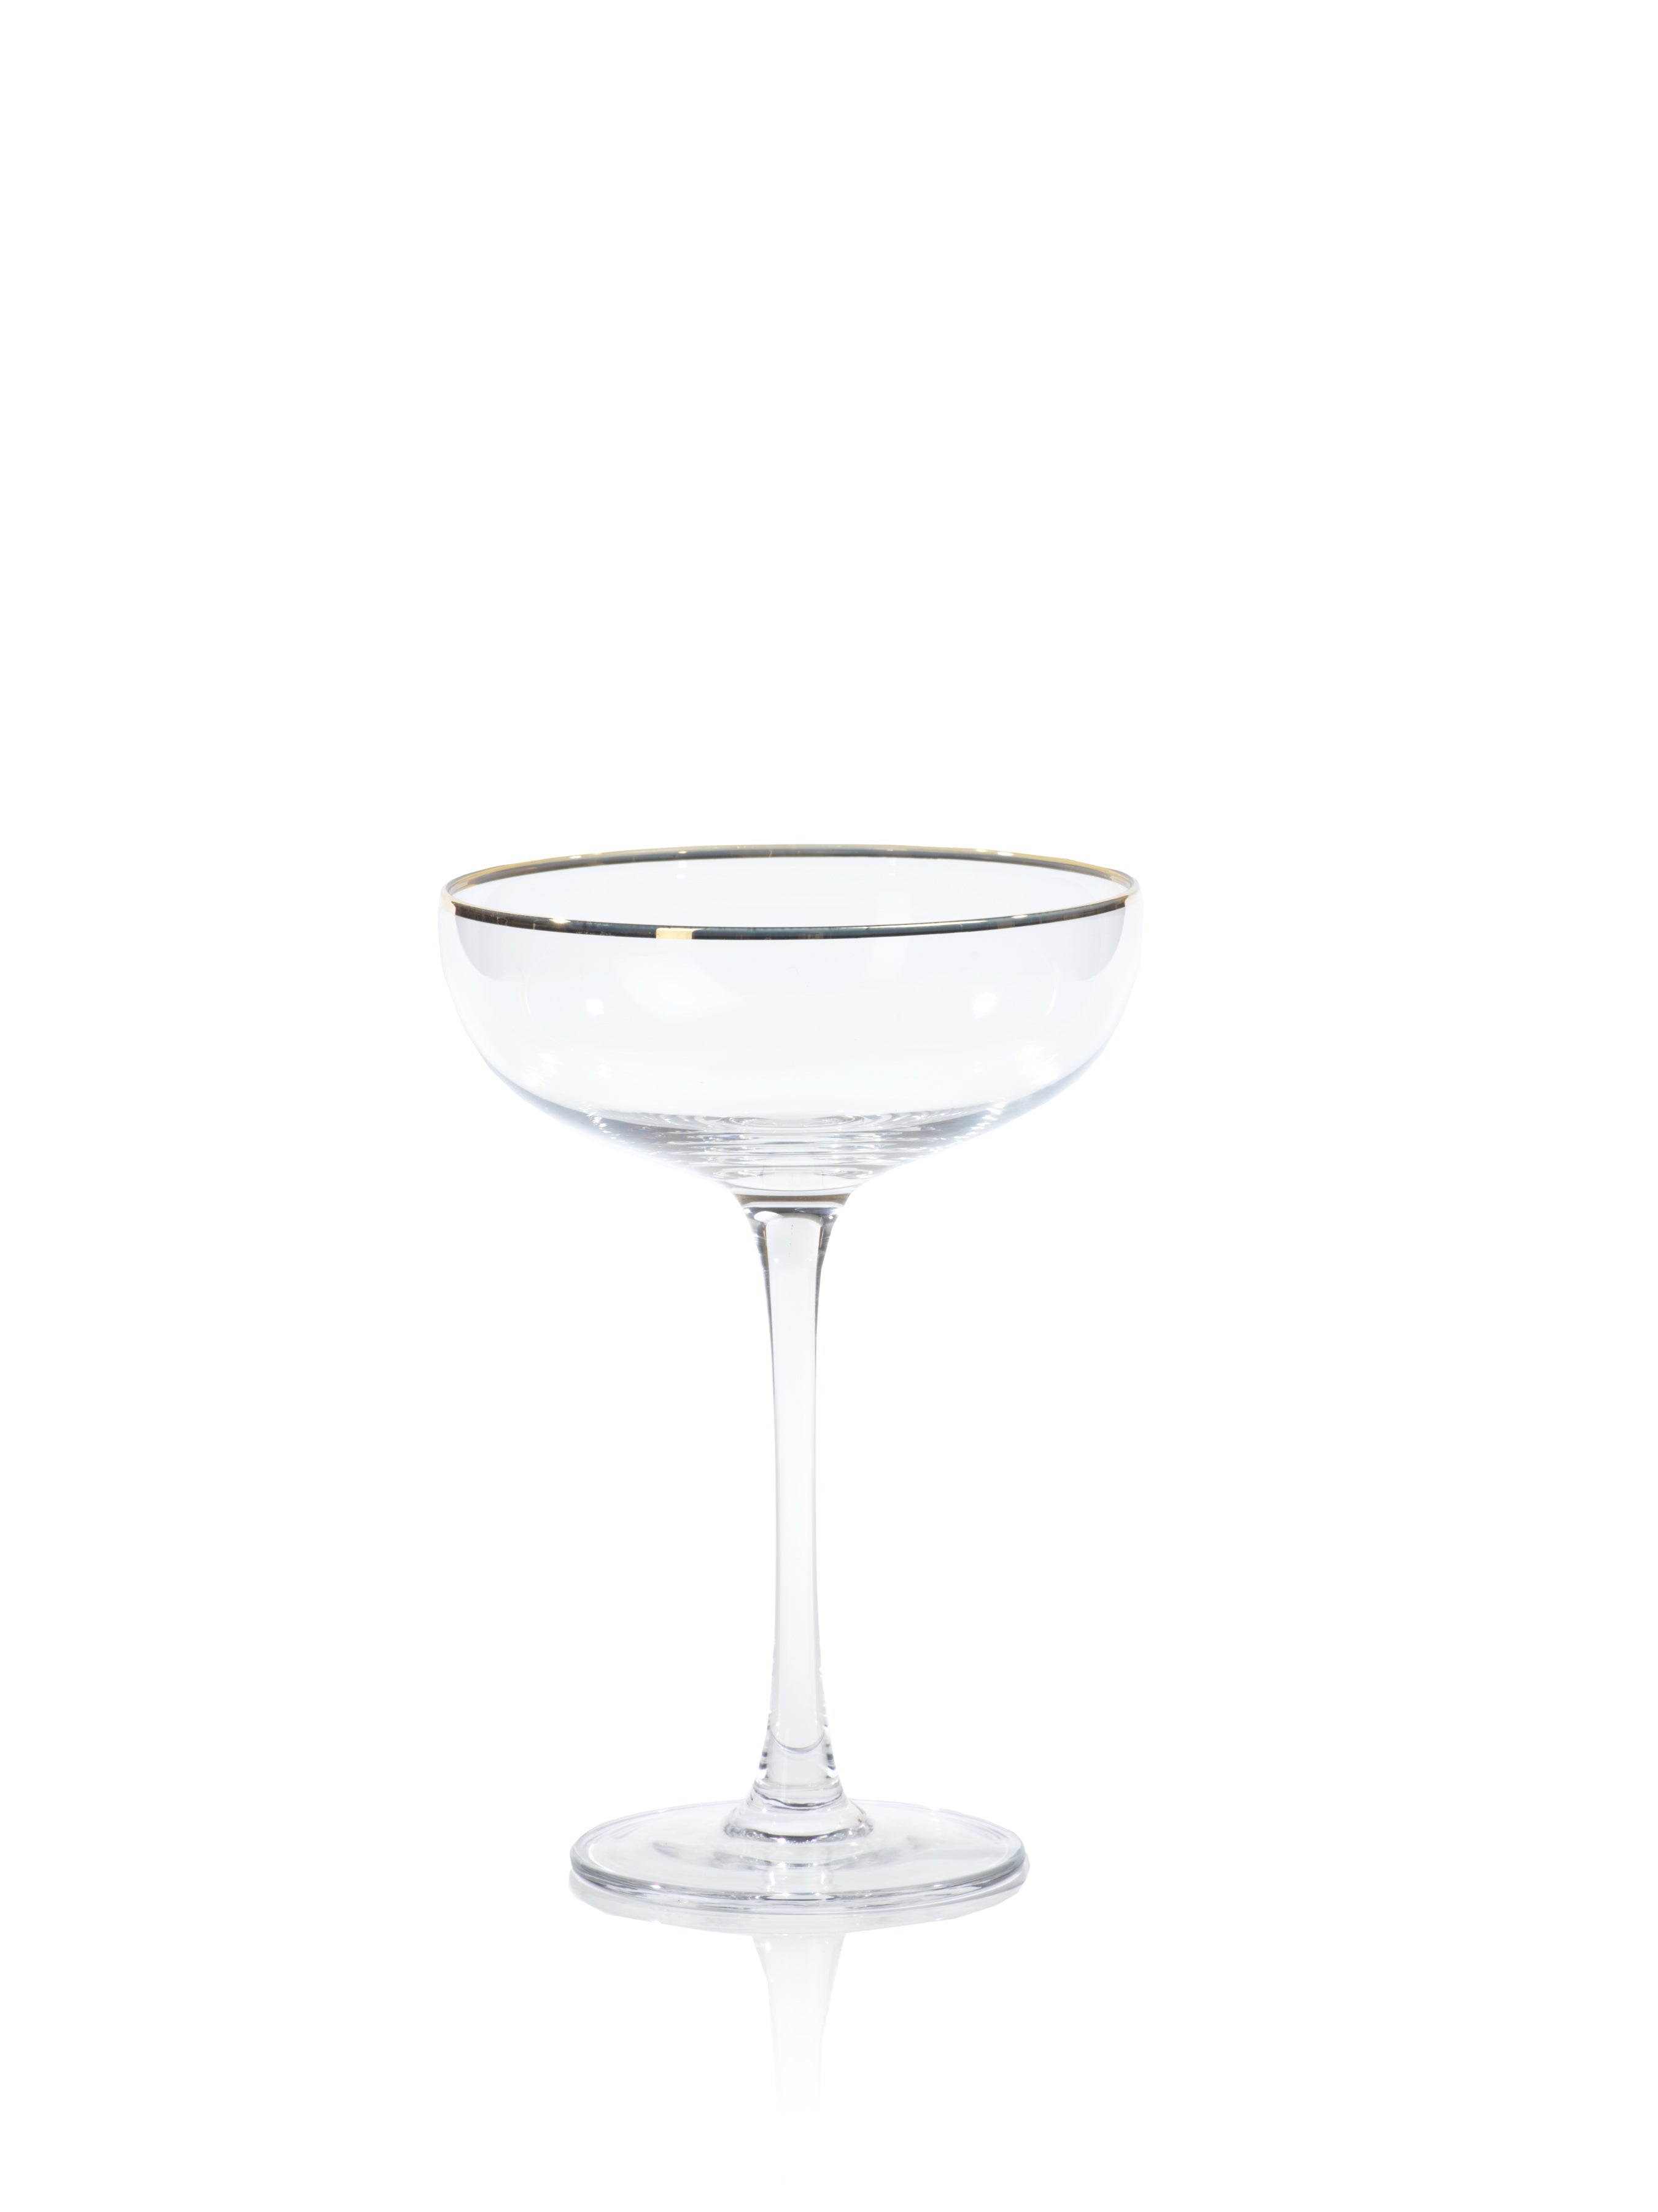 Aqua Blue Pescara White Dot Martini Glasses, Set of 4 by Zodax